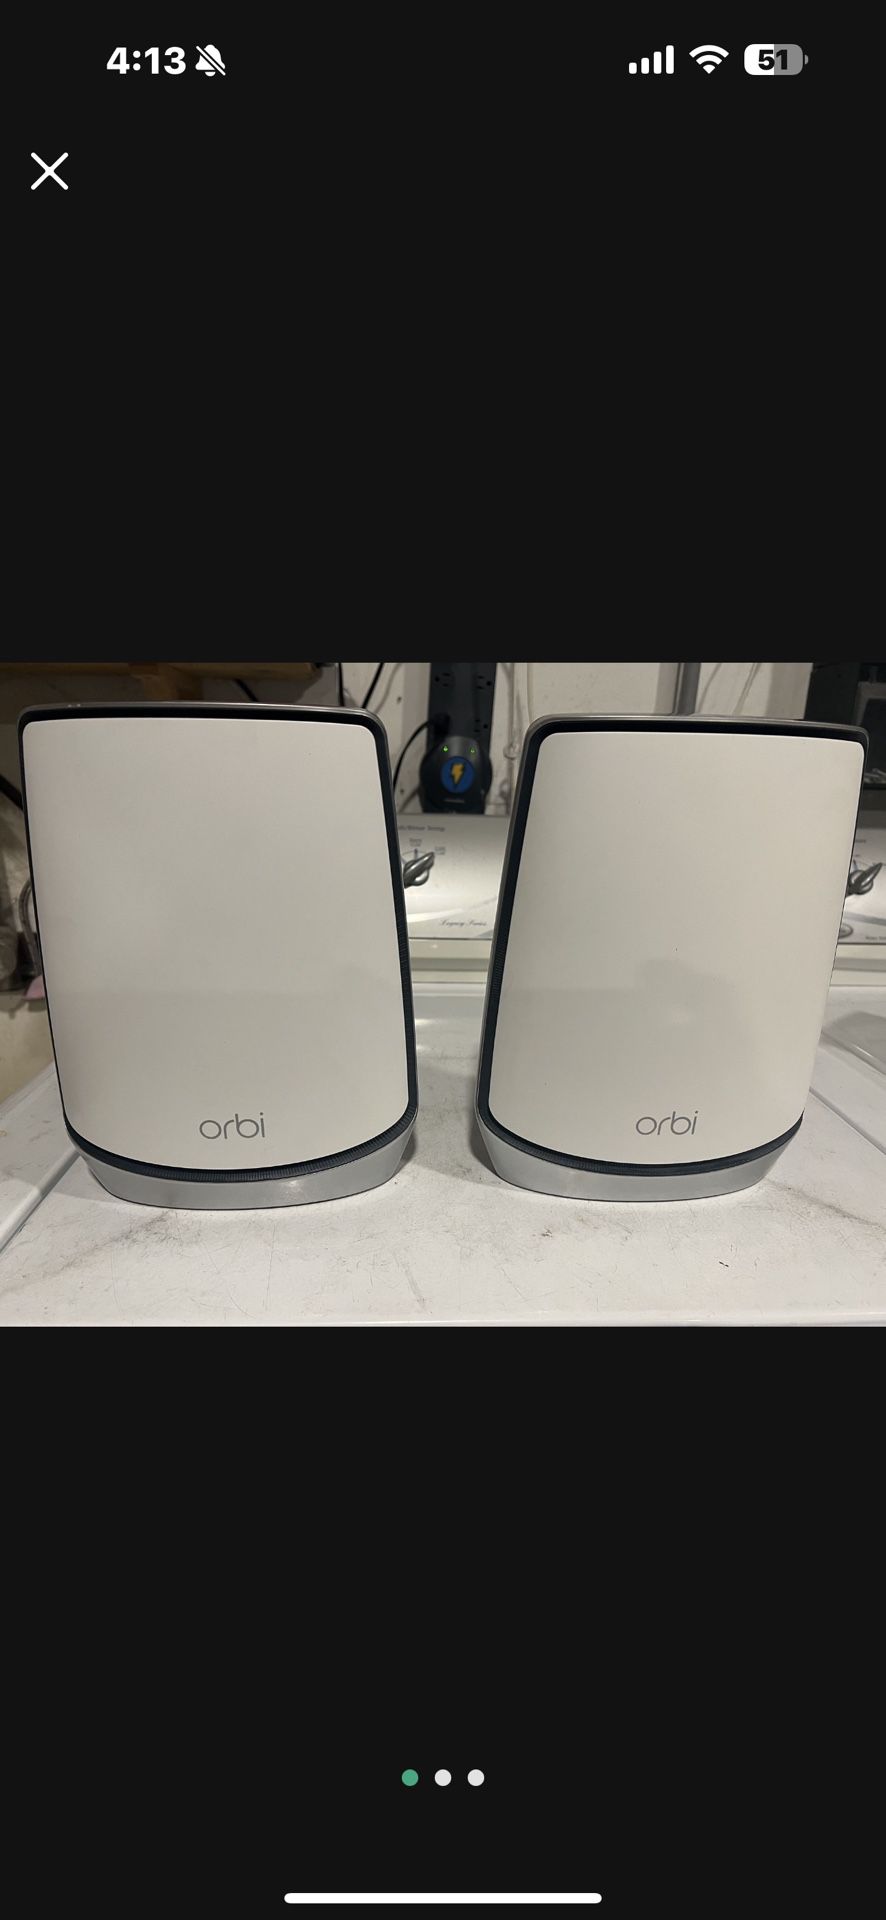 Netgear Orbi WiFi 6 Router and Satellite 